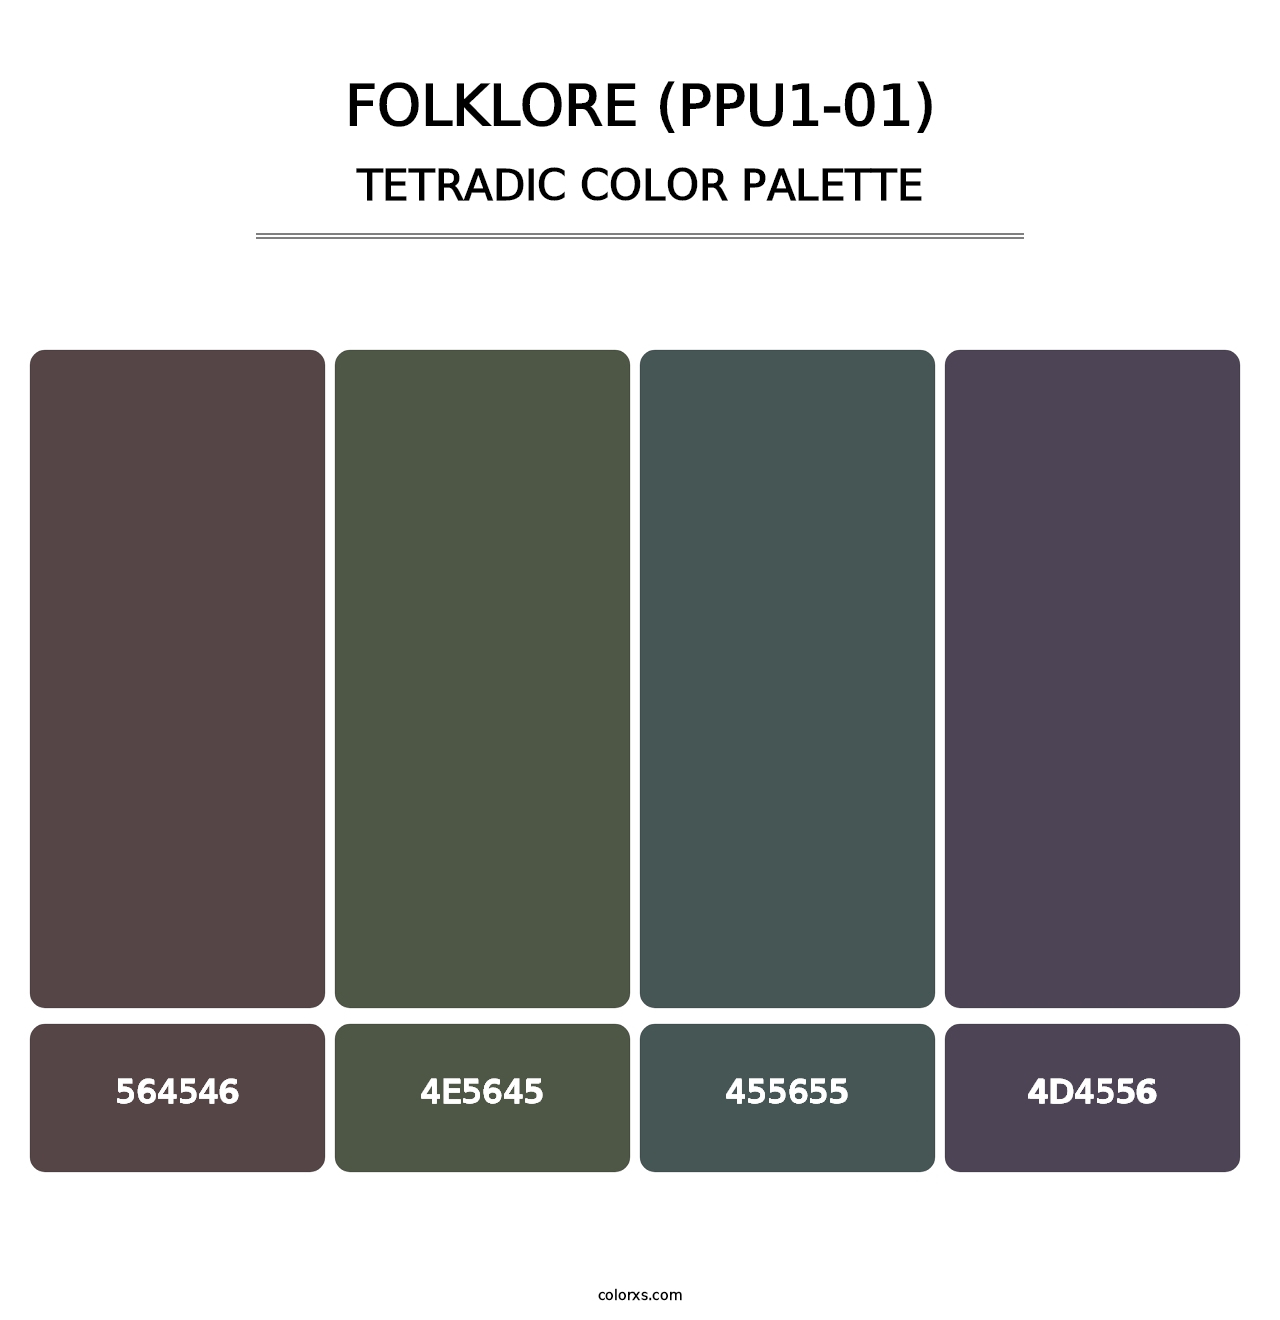 Folklore (PPU1-01) - Tetradic Color Palette